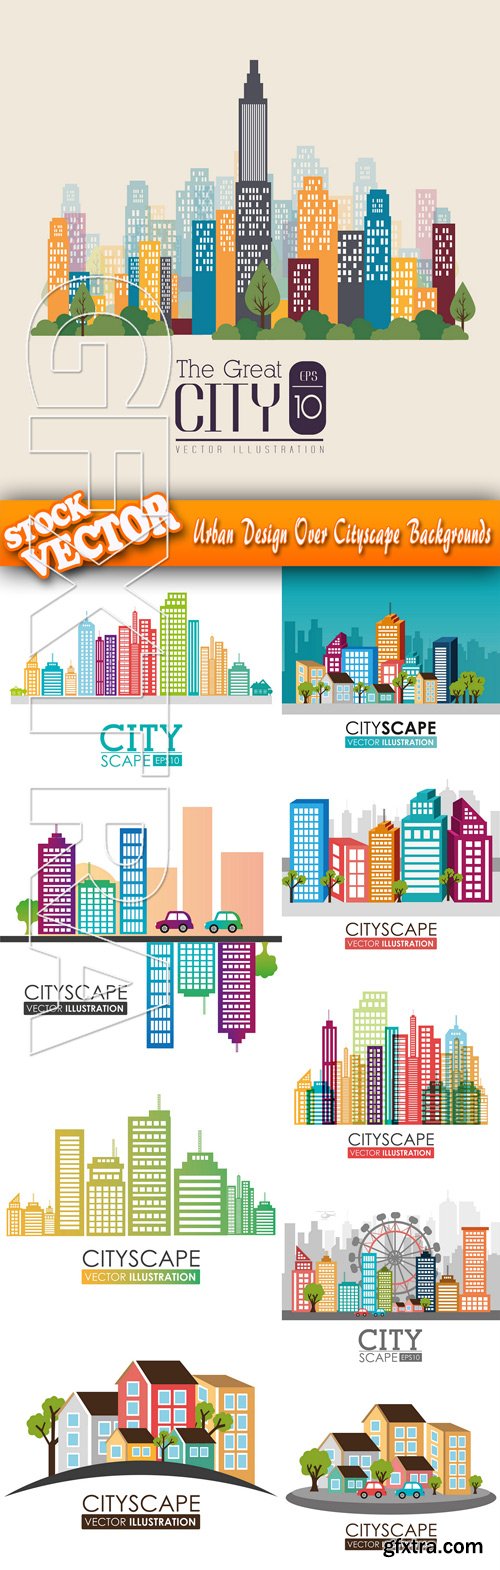 Stock Vector - Urban Design Over Cityscape Backgrounds